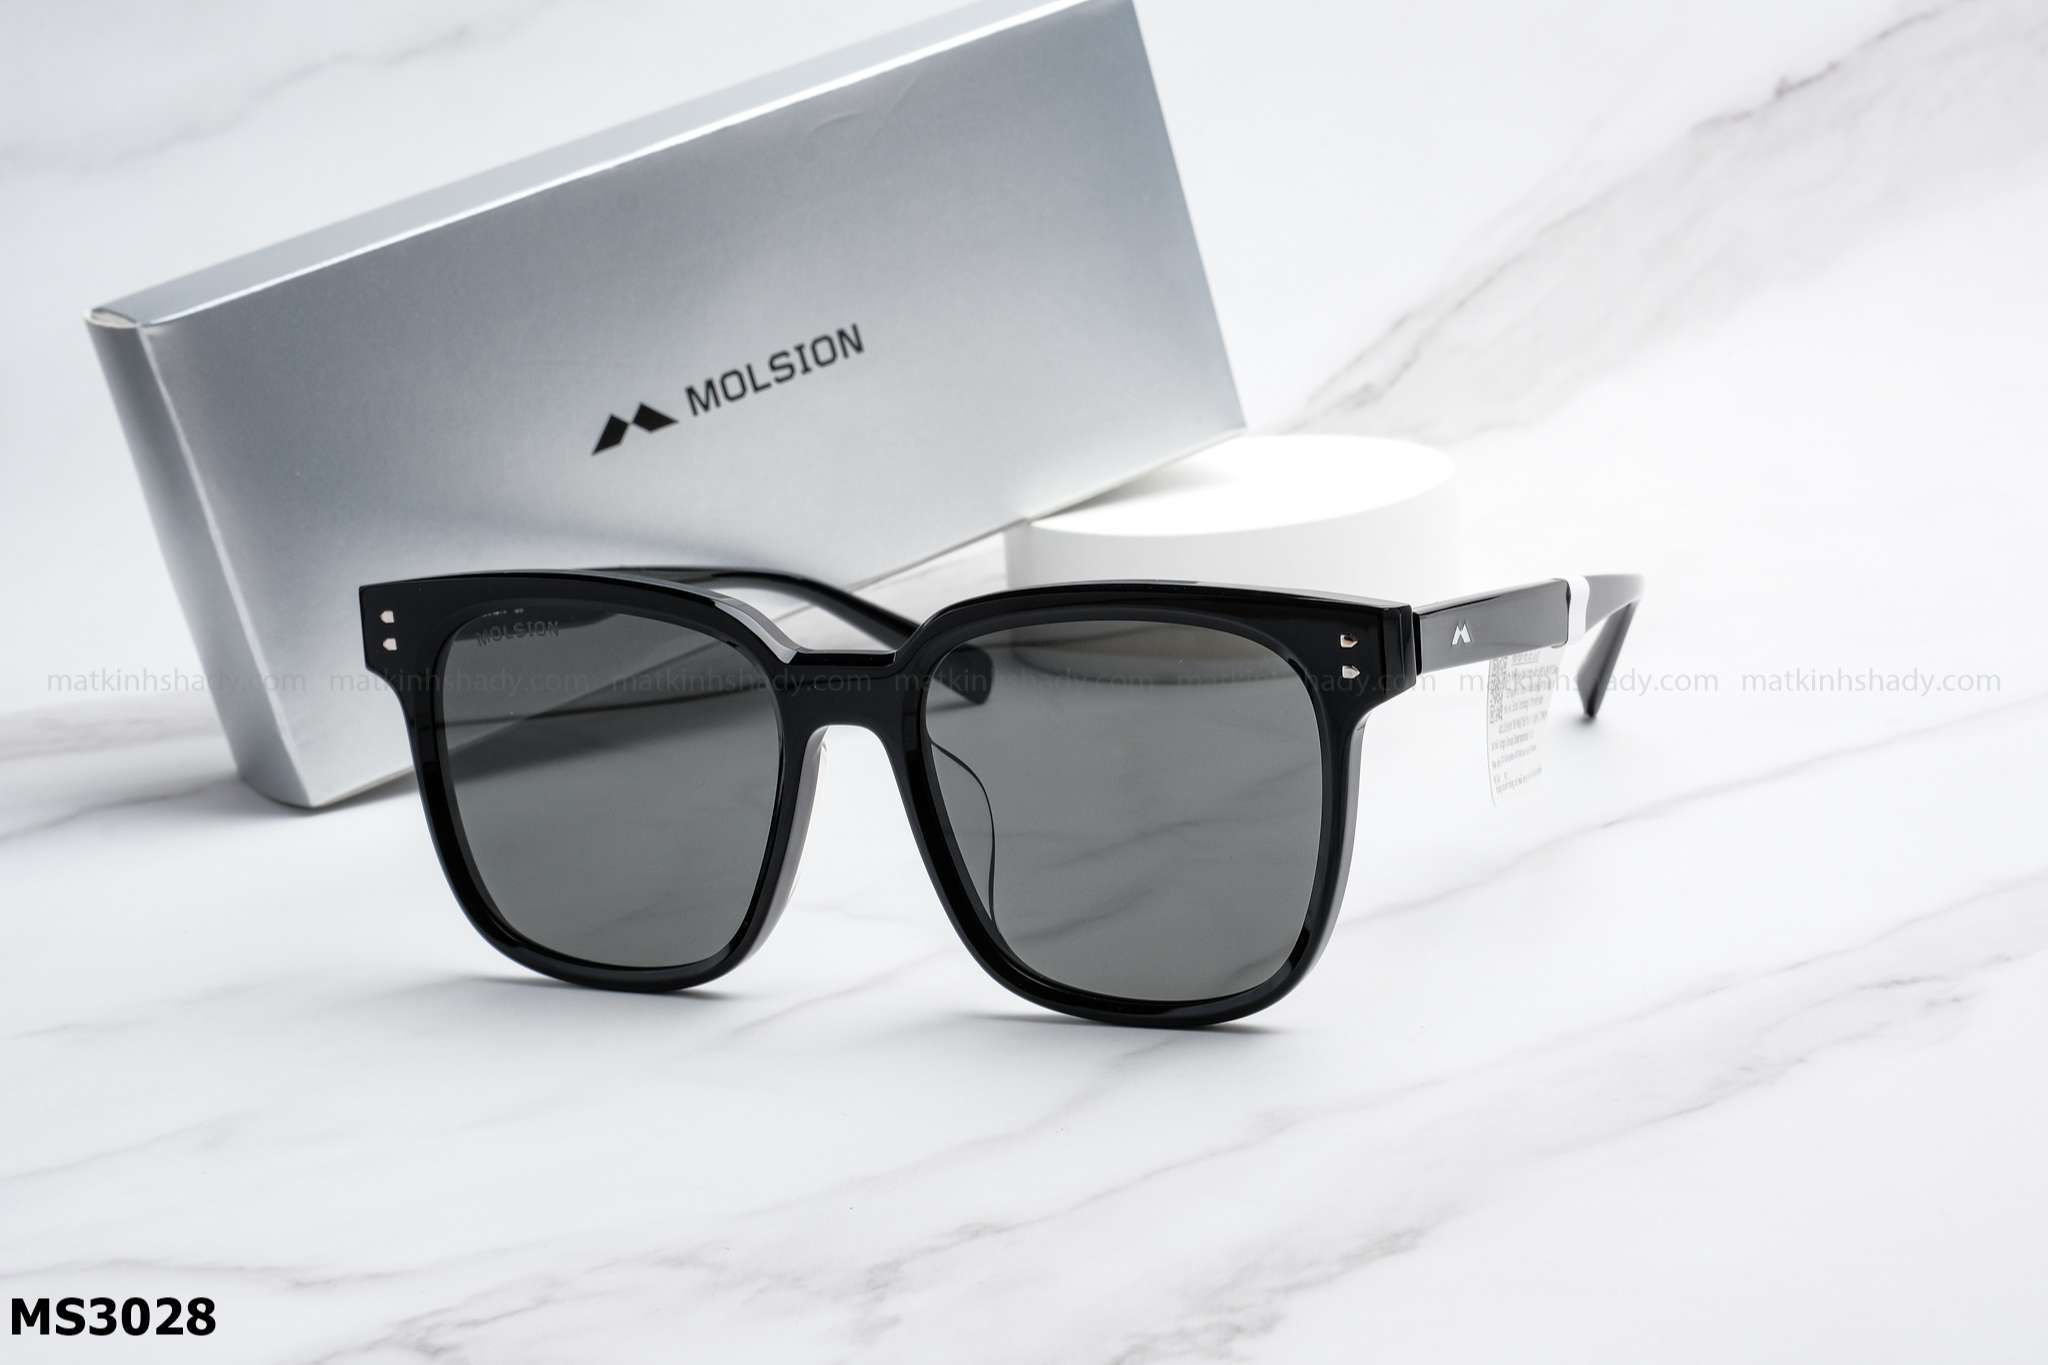  Molsion Eyewear - Sunglasses - MS3028 